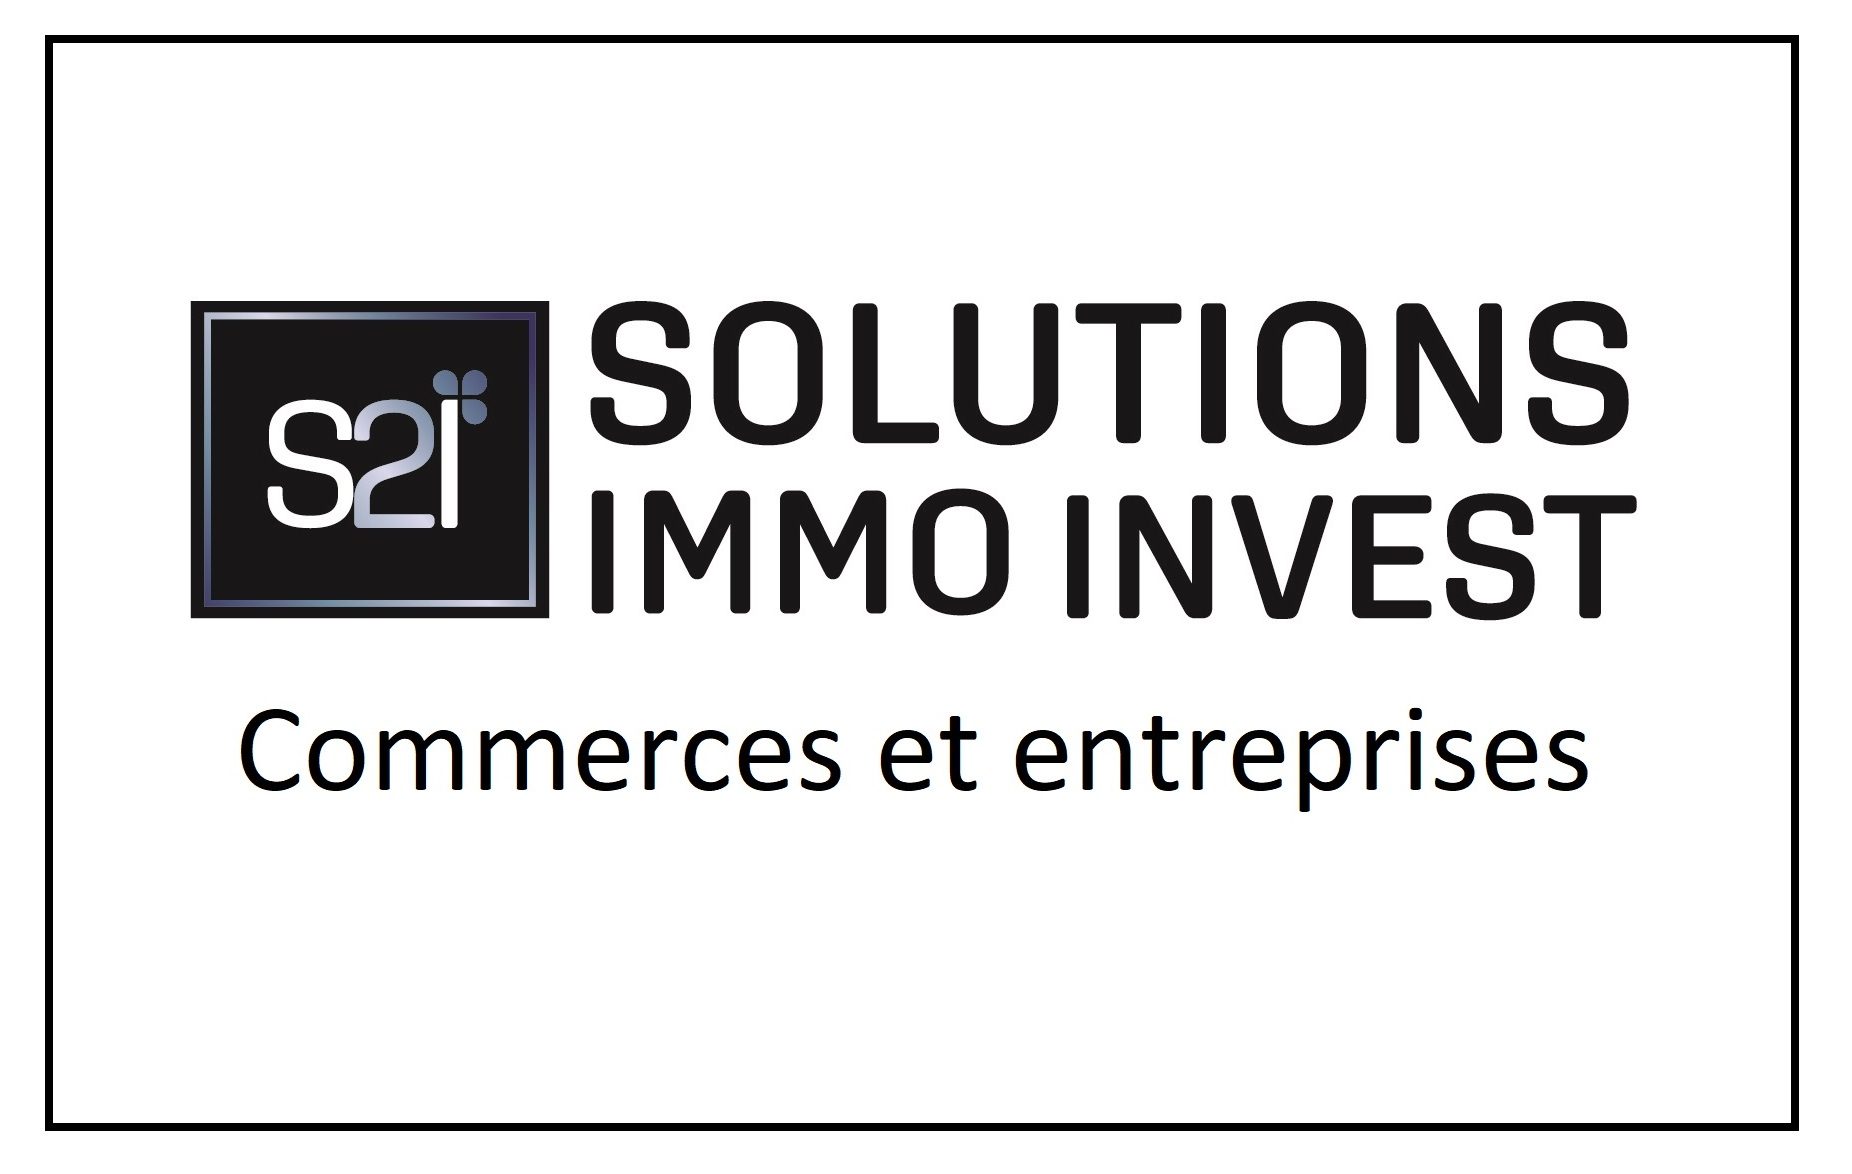 Vente Local Commercial 62m² 4 Pièces à Brest (29200) - Solutions Immo Invest